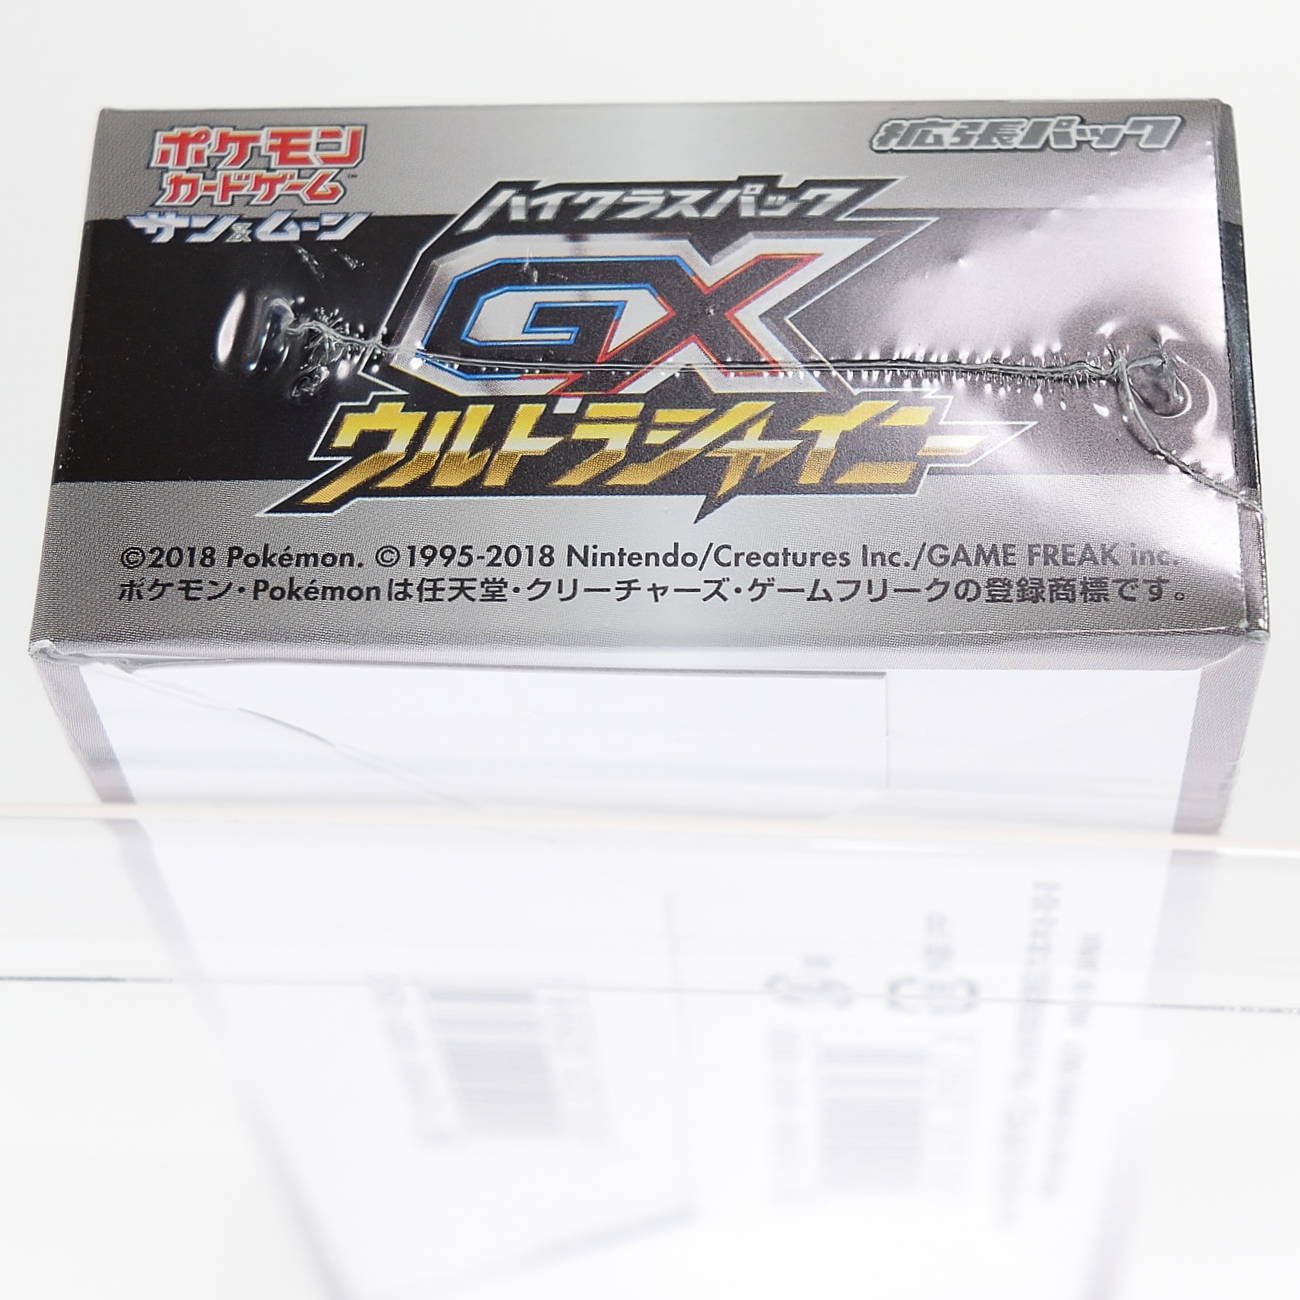 Kartana GX High Class Pack GX Ultra Shiny, Pokémon